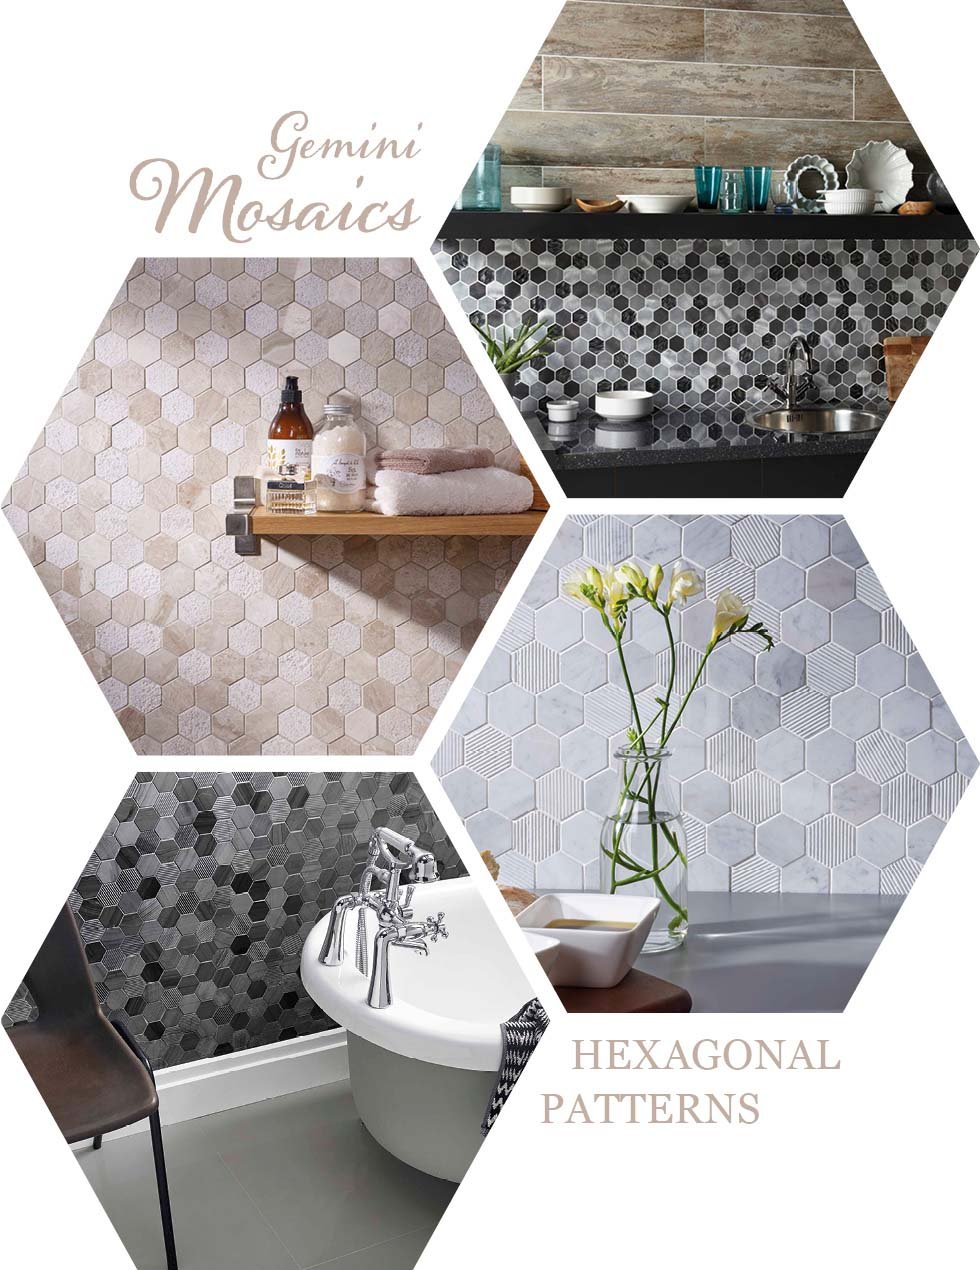 Collage of Gemini Mosaic bathroom tiles